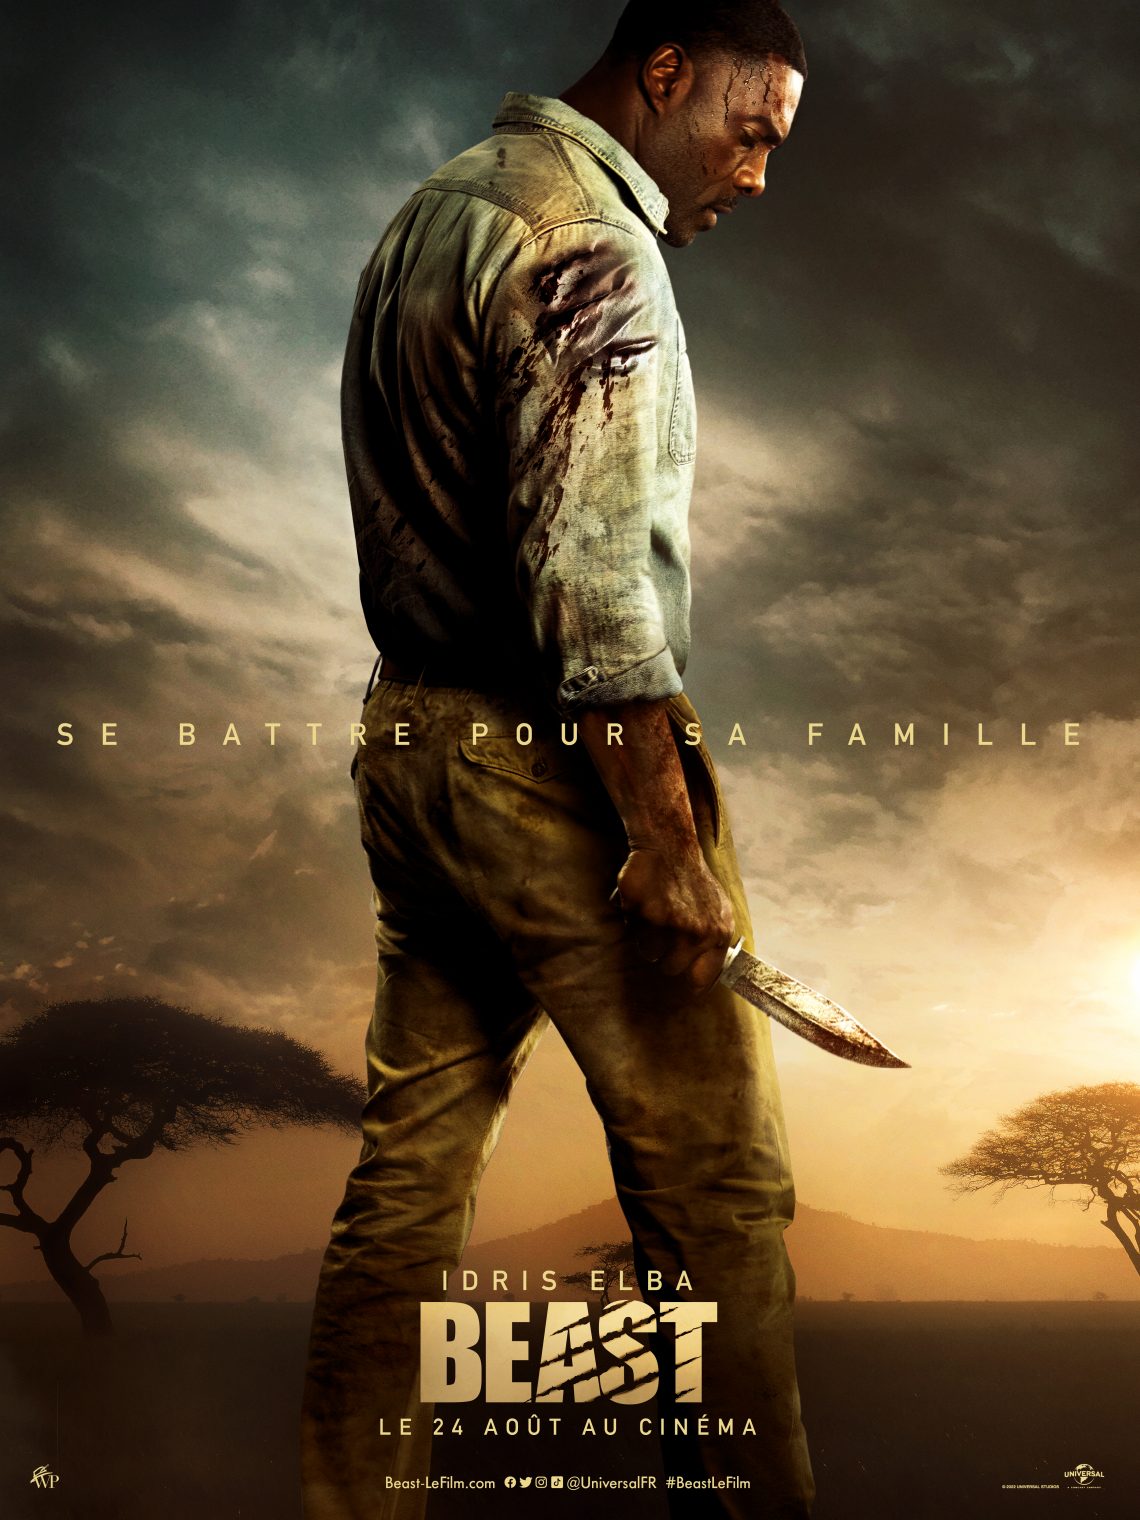 BEAST Idris Elba cinéma